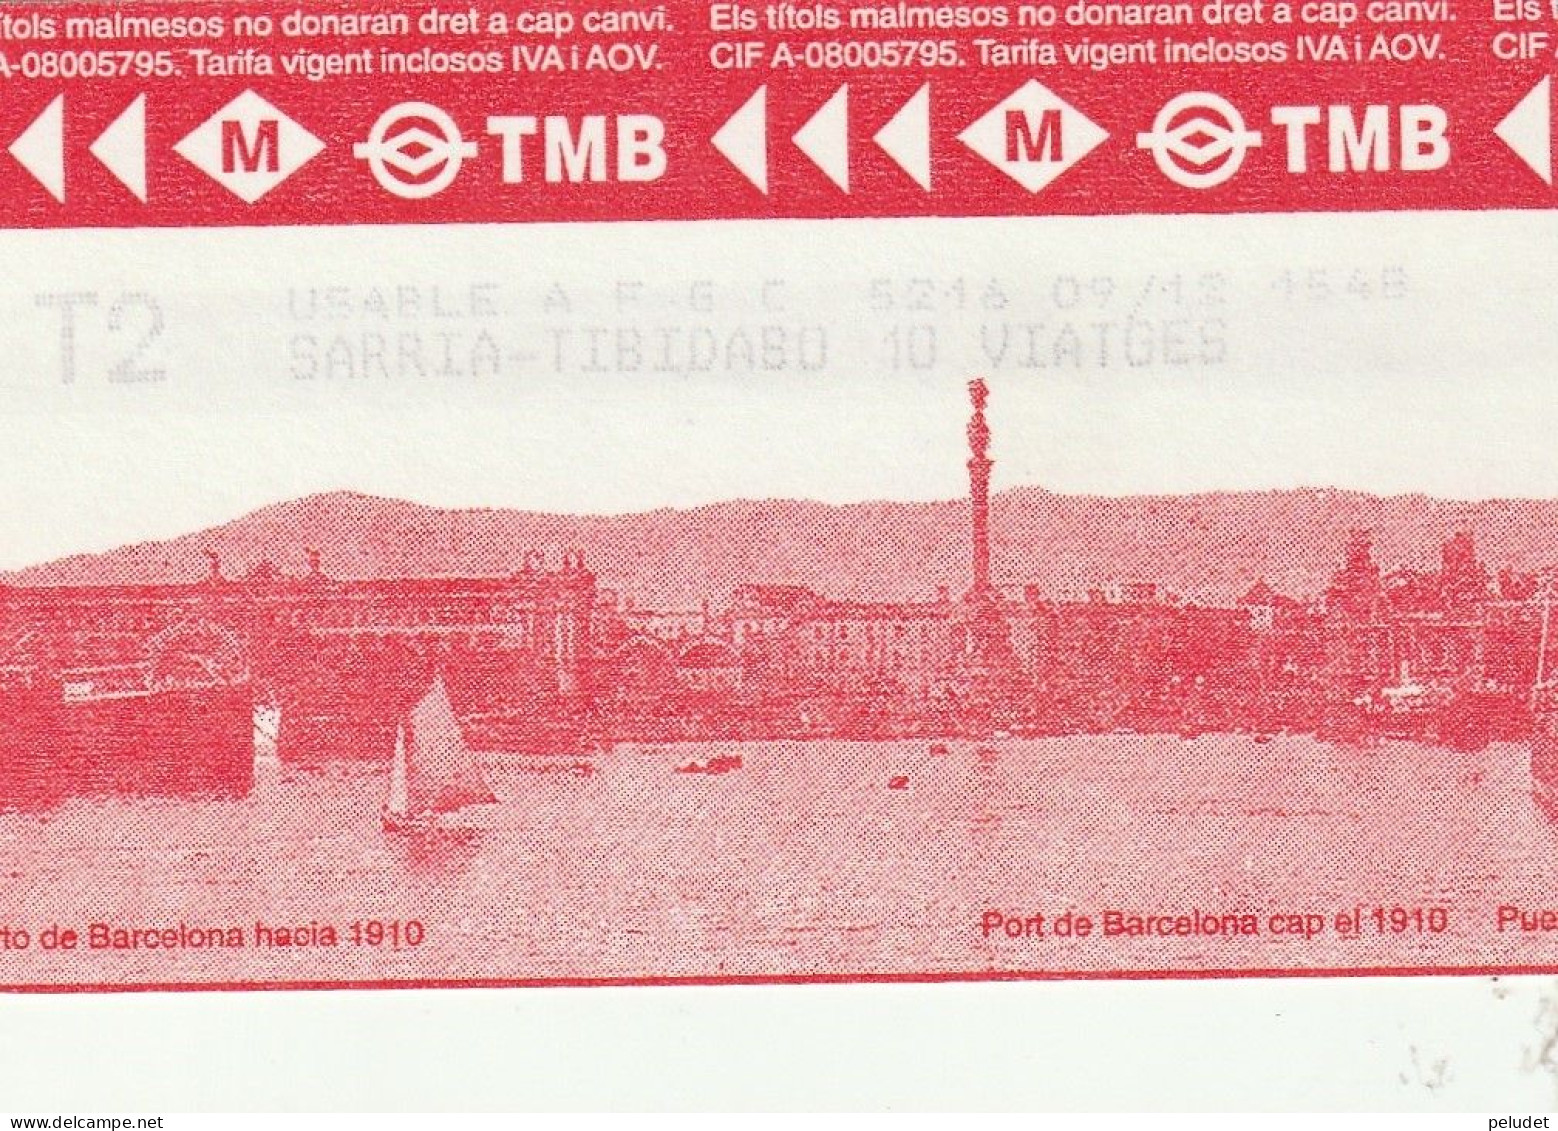 Ticket Metro Subway Barcelona M TMB - 1997? - Europe